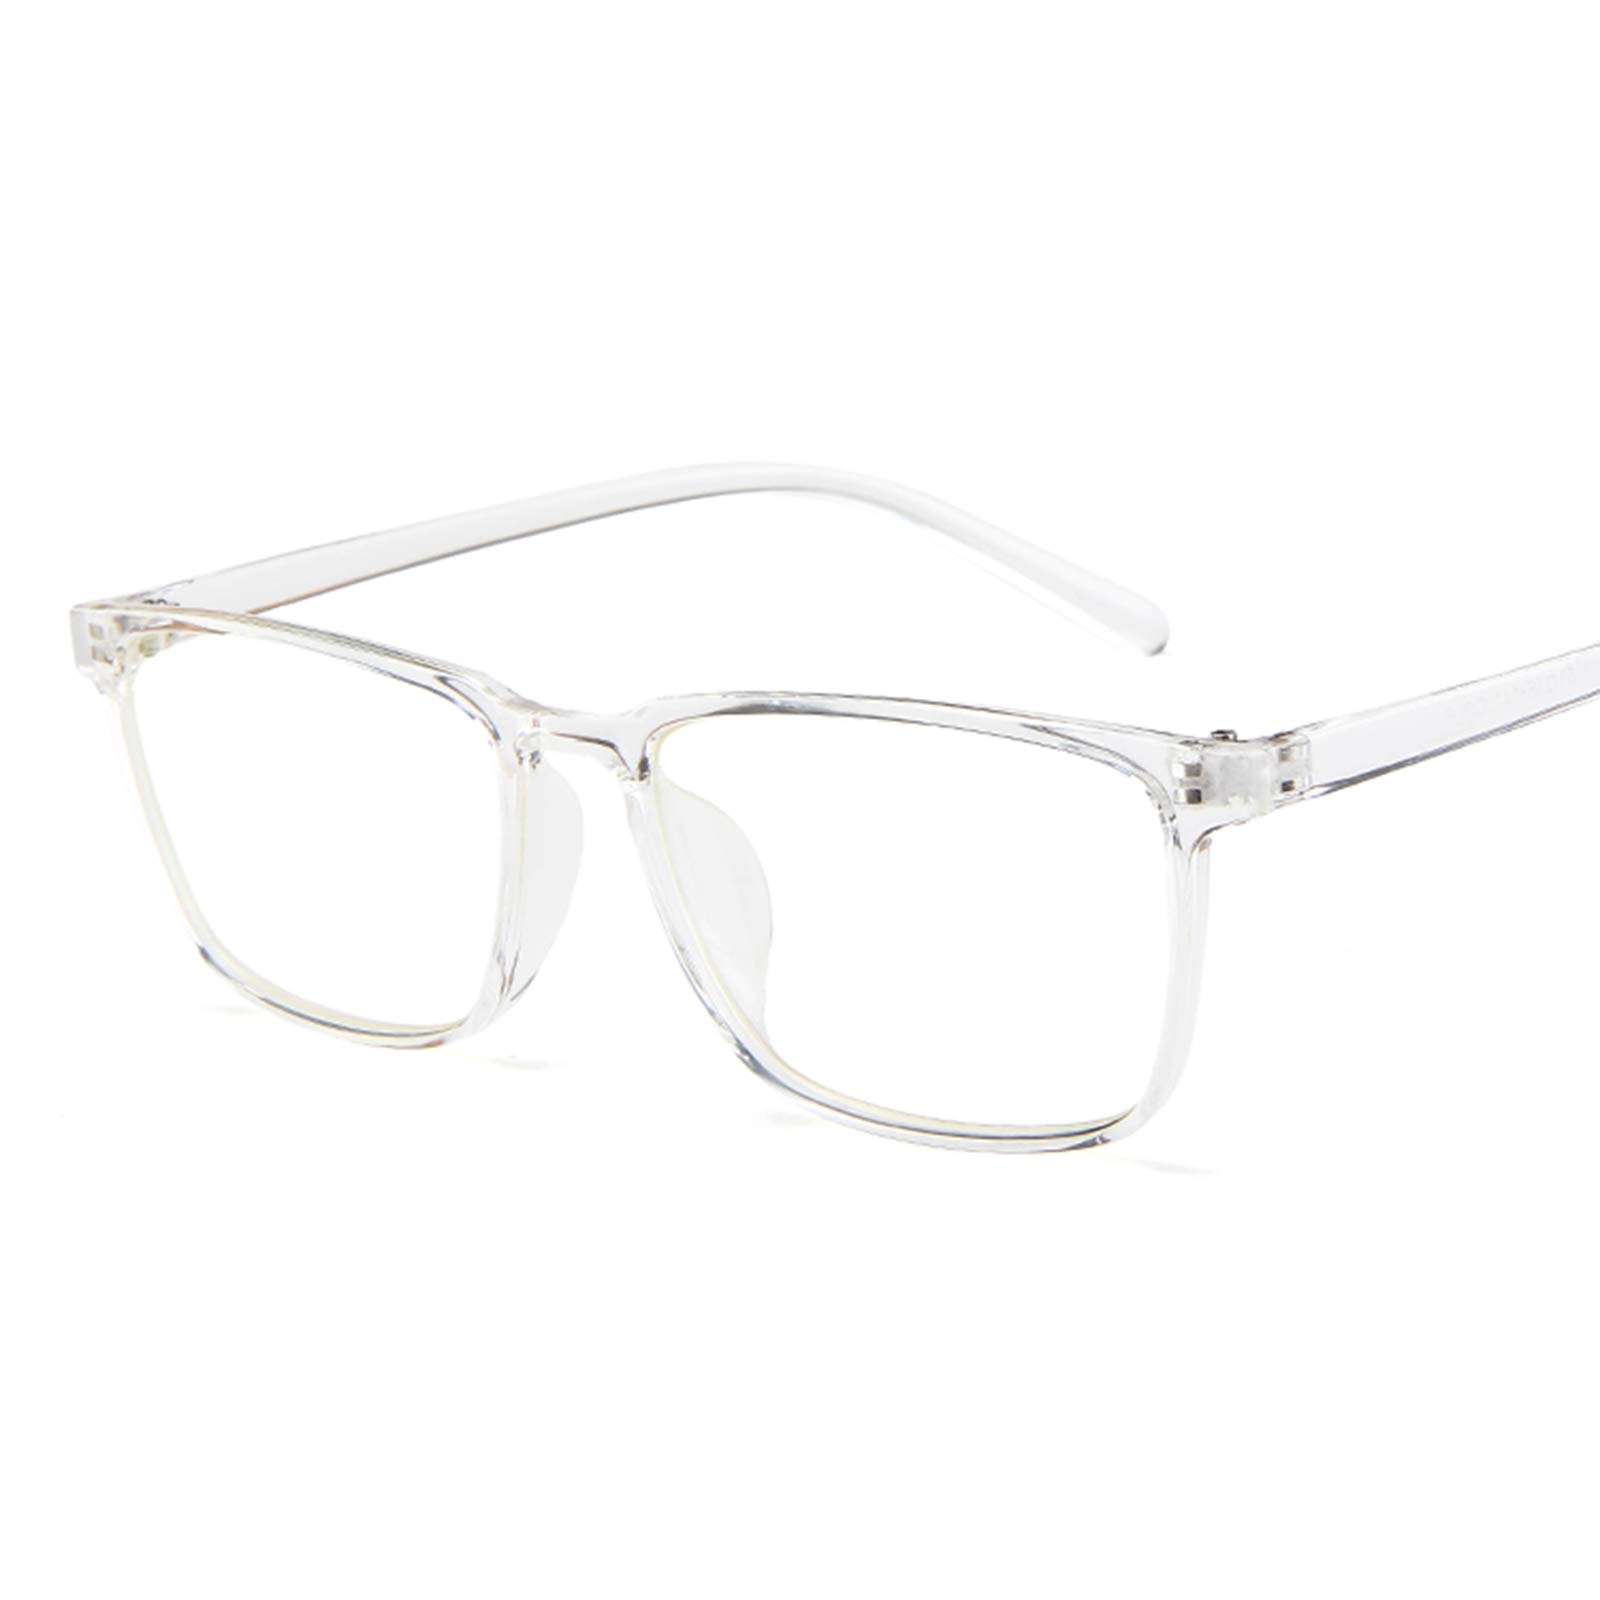 Distance Glasses for Men Women Lightweight Nearsighted Myopia Glasses ...